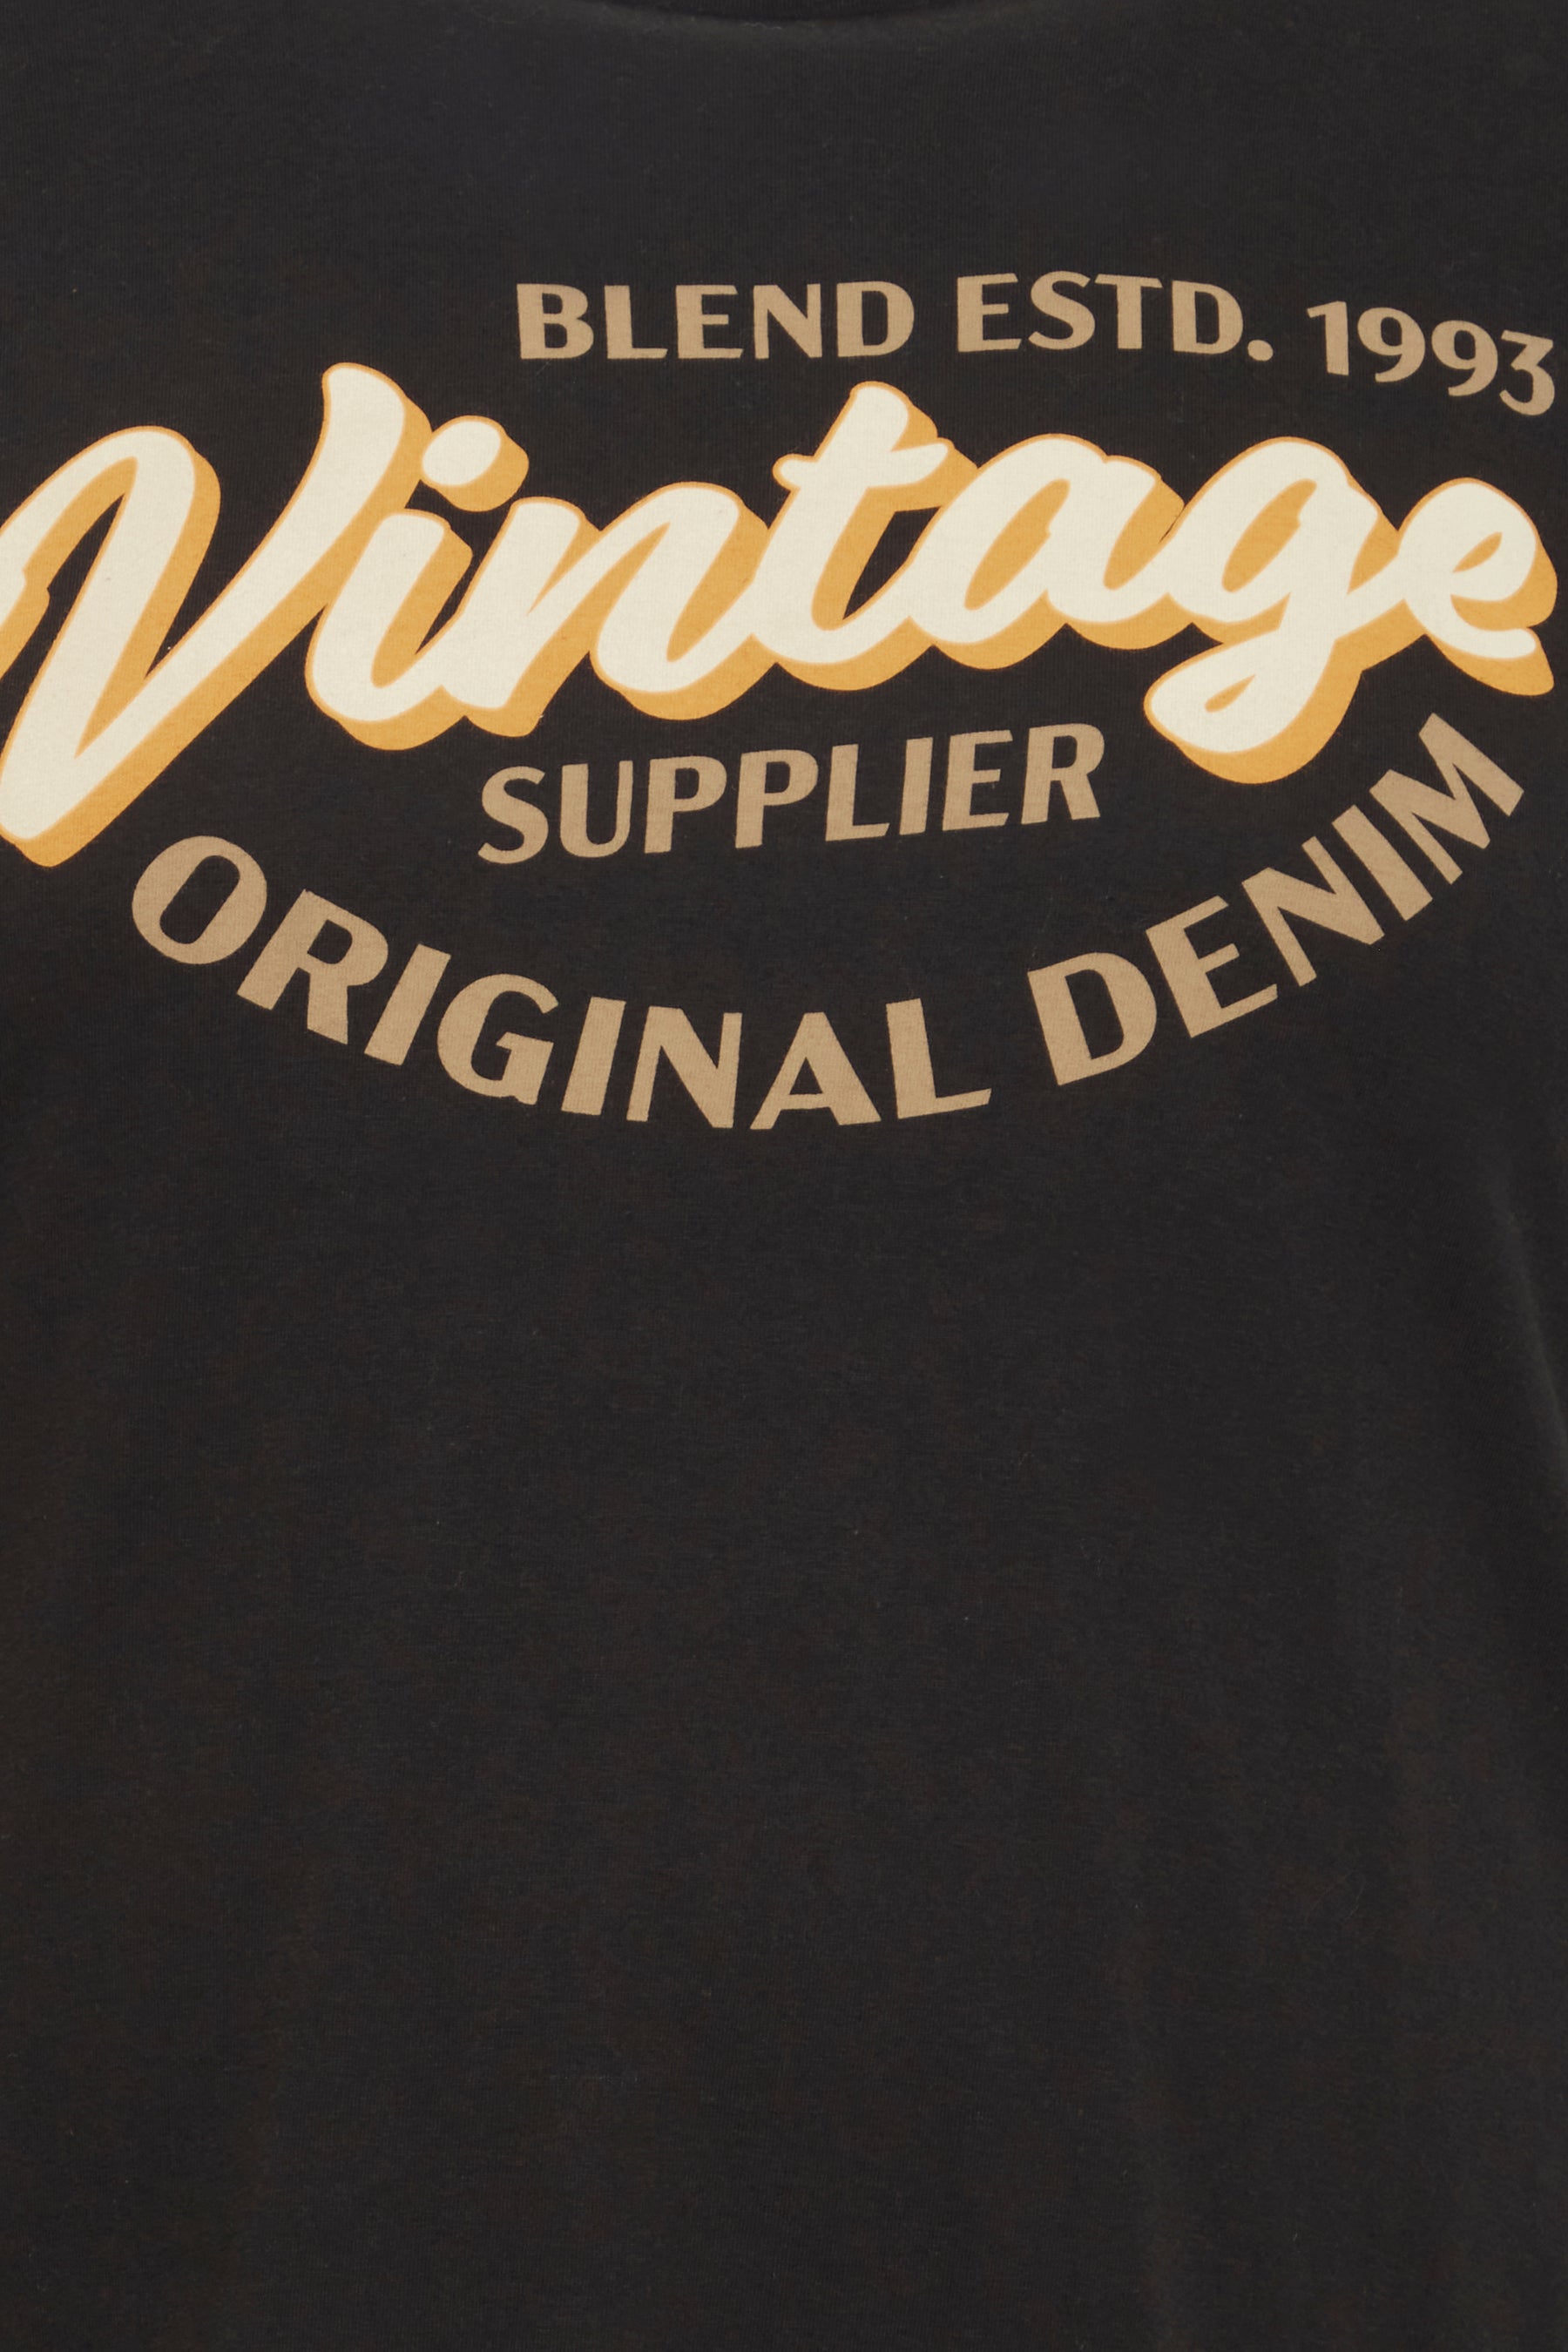 Vintage Supplier Print T-Shirt